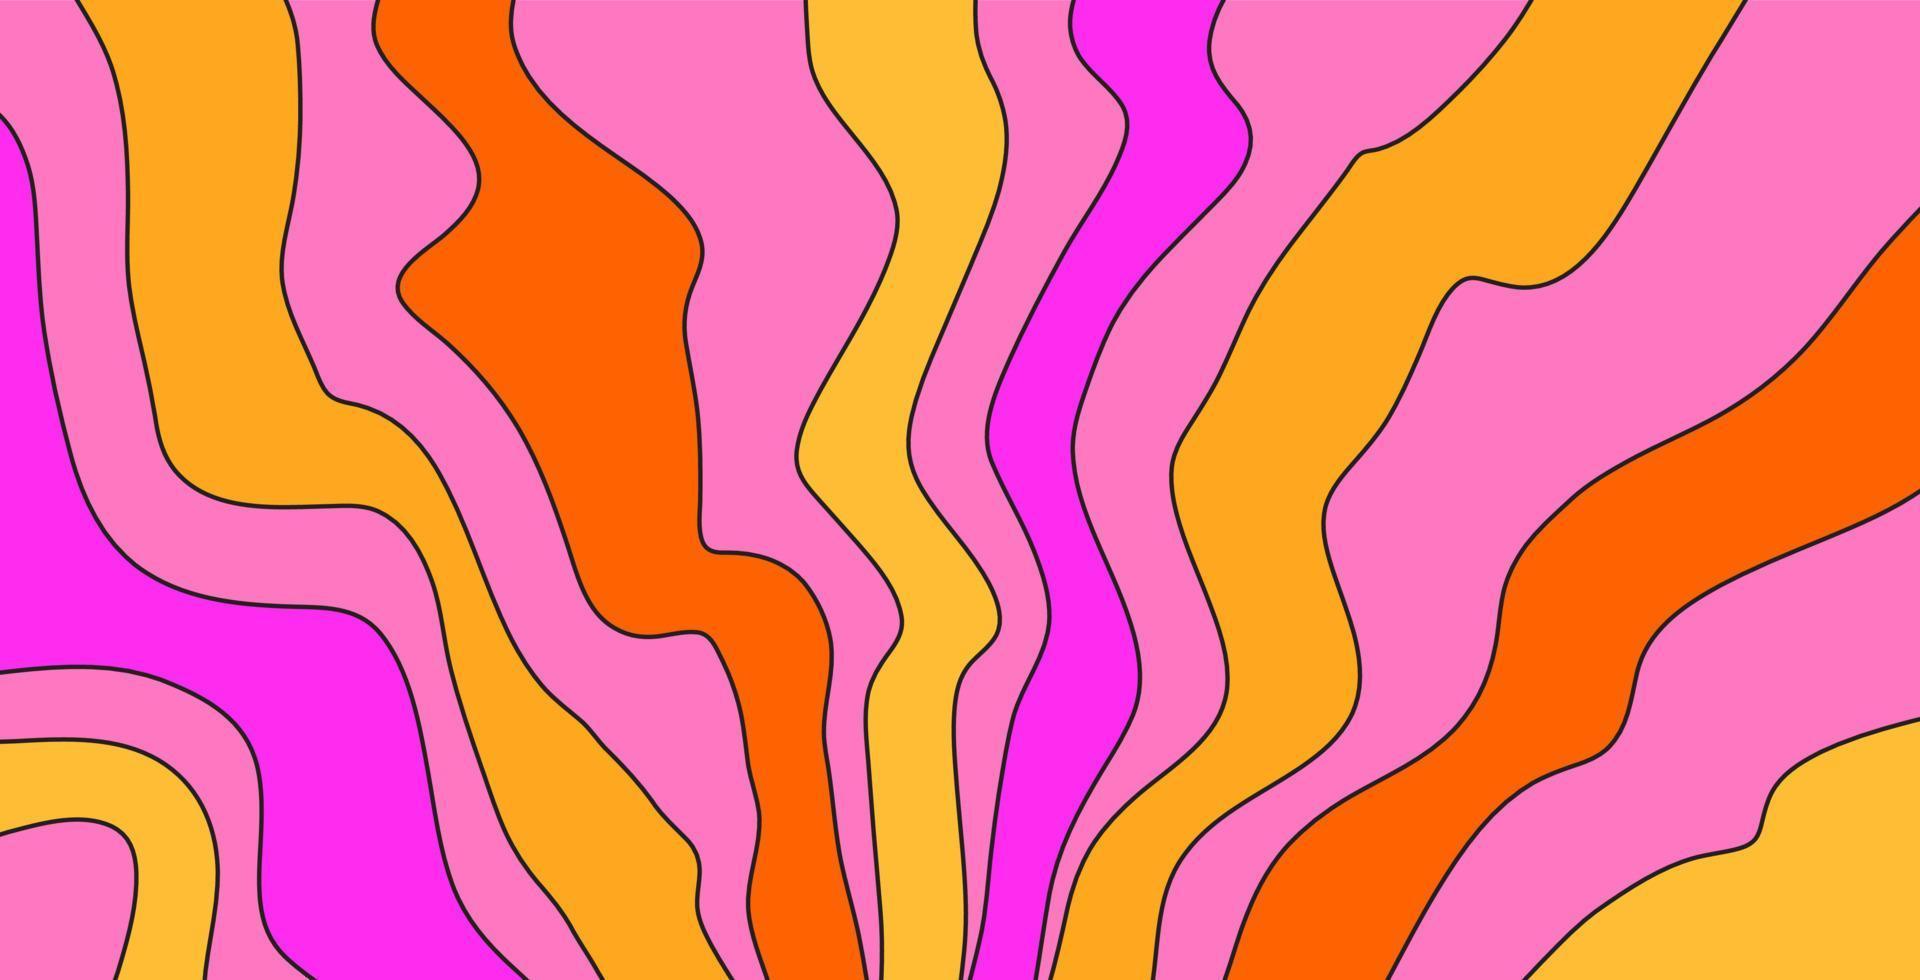 abstract groovy hippie wallpaper,wavy strip line background trendy vector